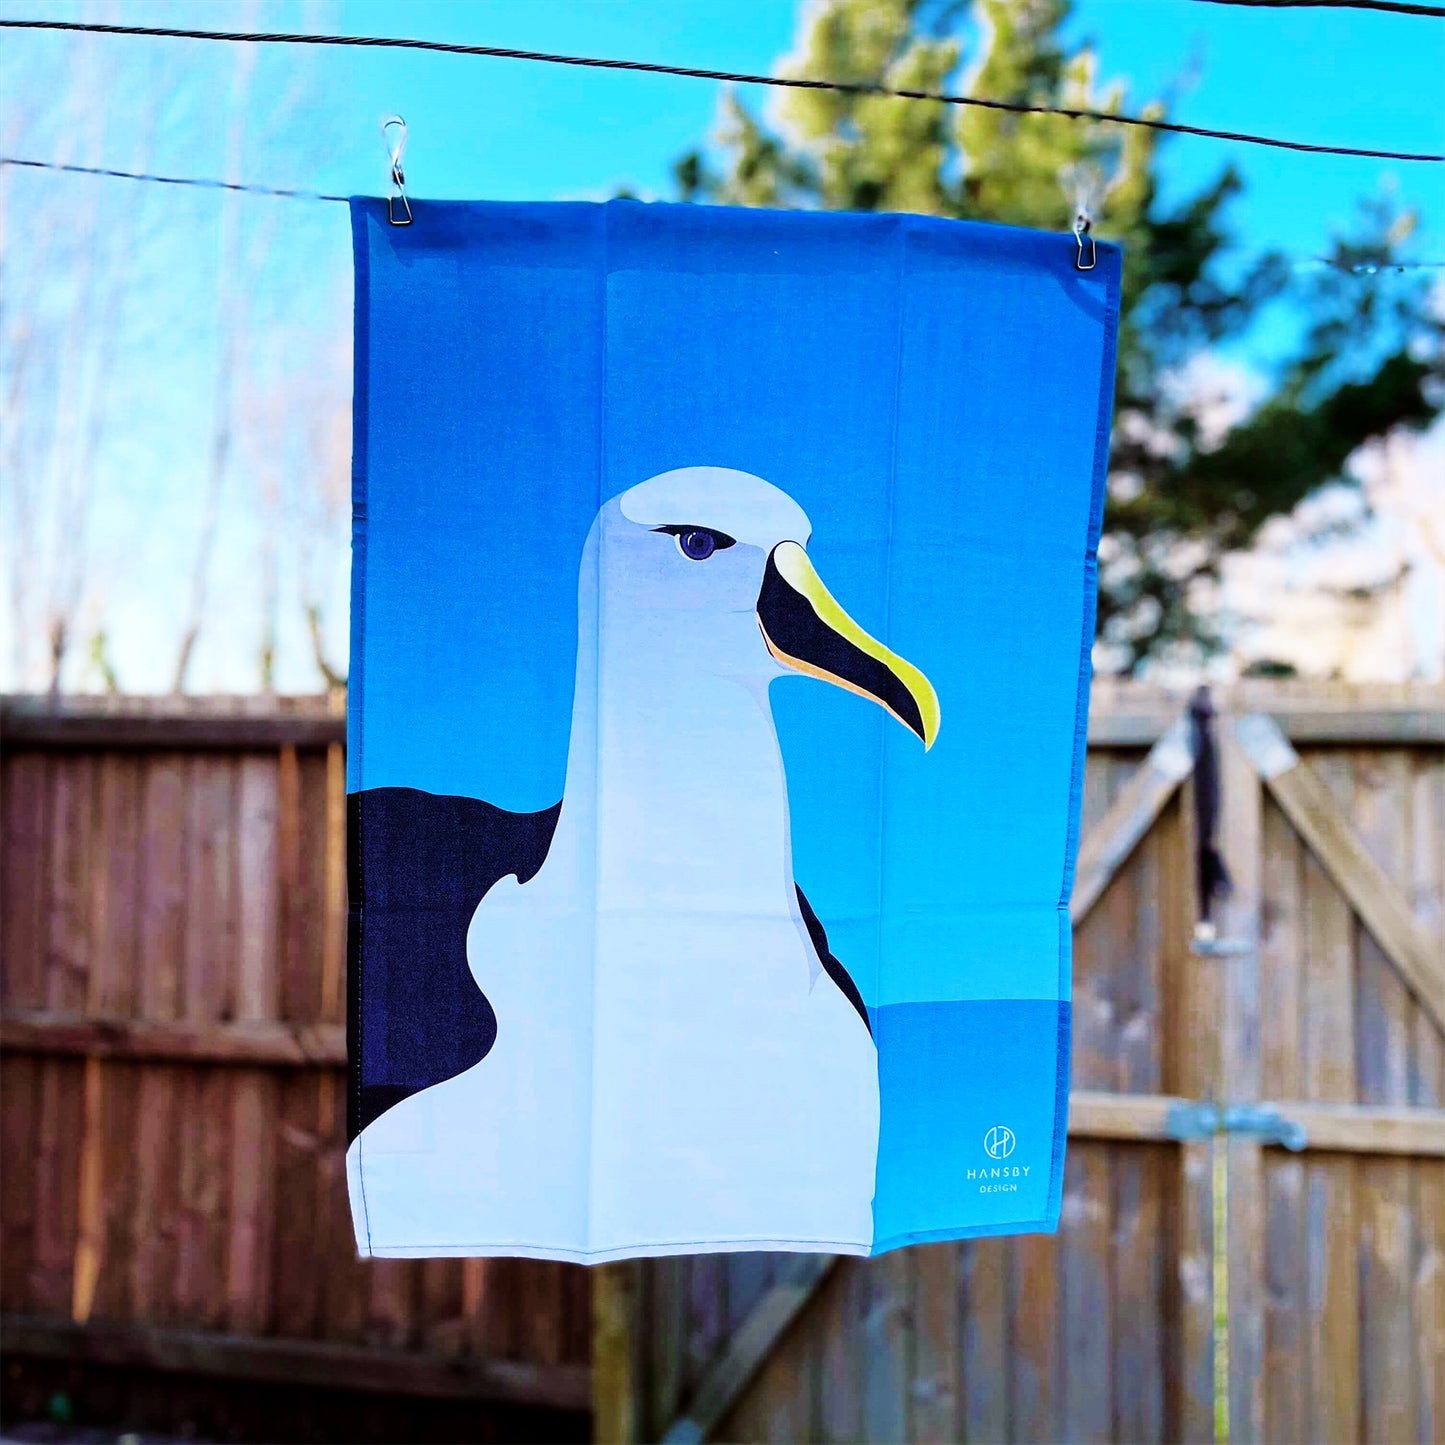 Tea towel with an Albatross printed on it.